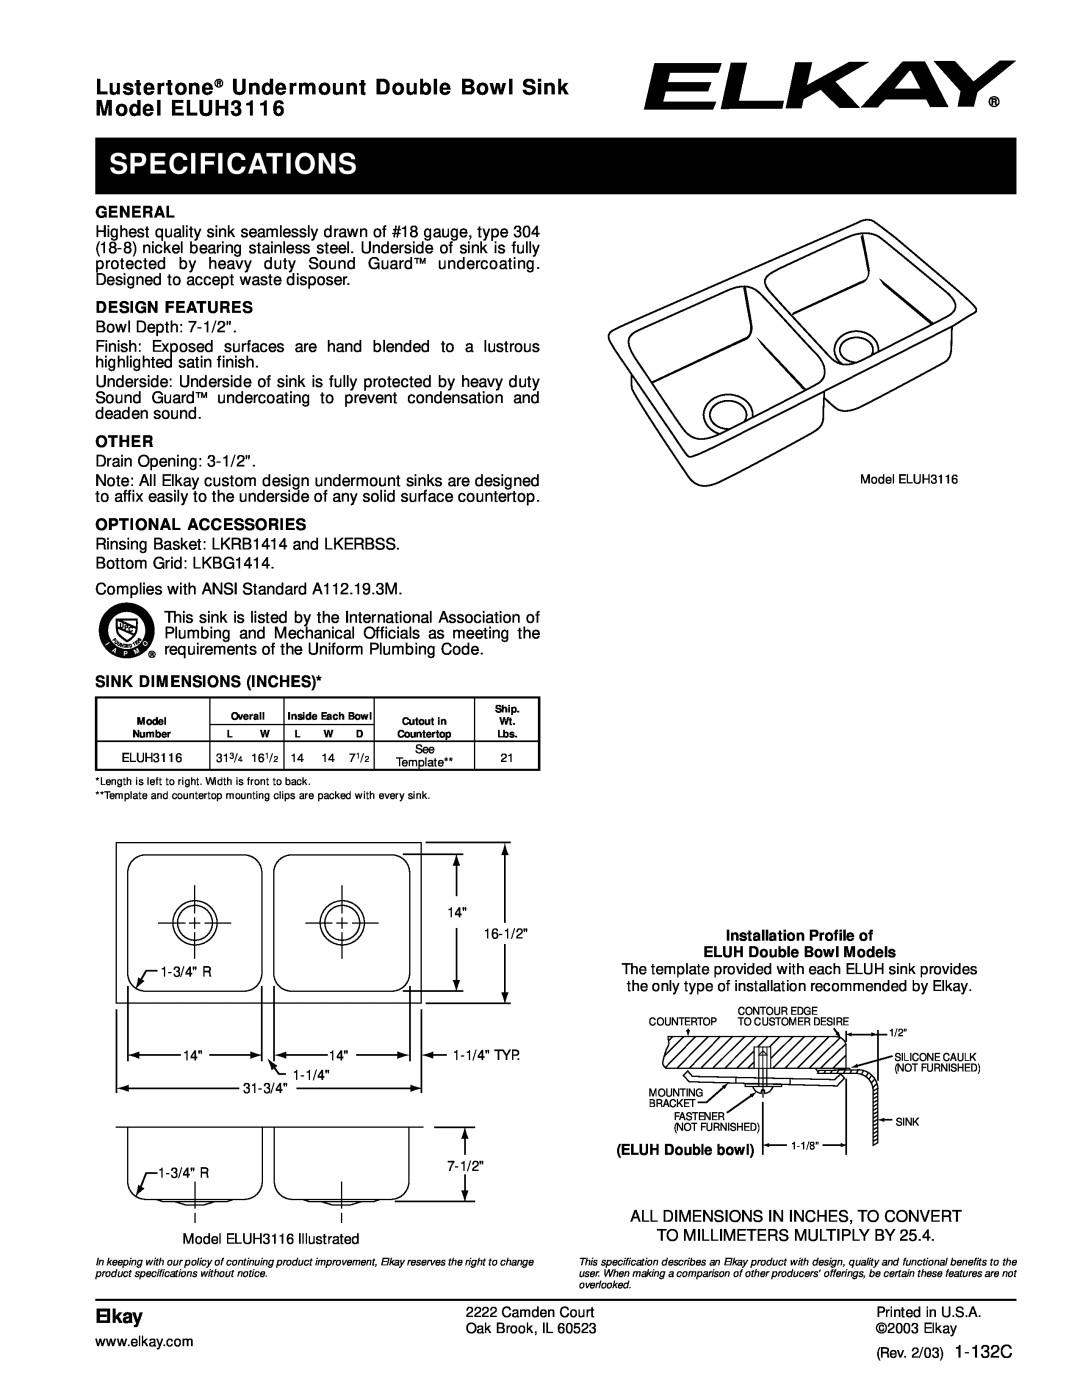 Elkay specifications Specifications, Lustertone Undermount Double Bowl Sink Model ELUH3116, Elkay, General, Other 